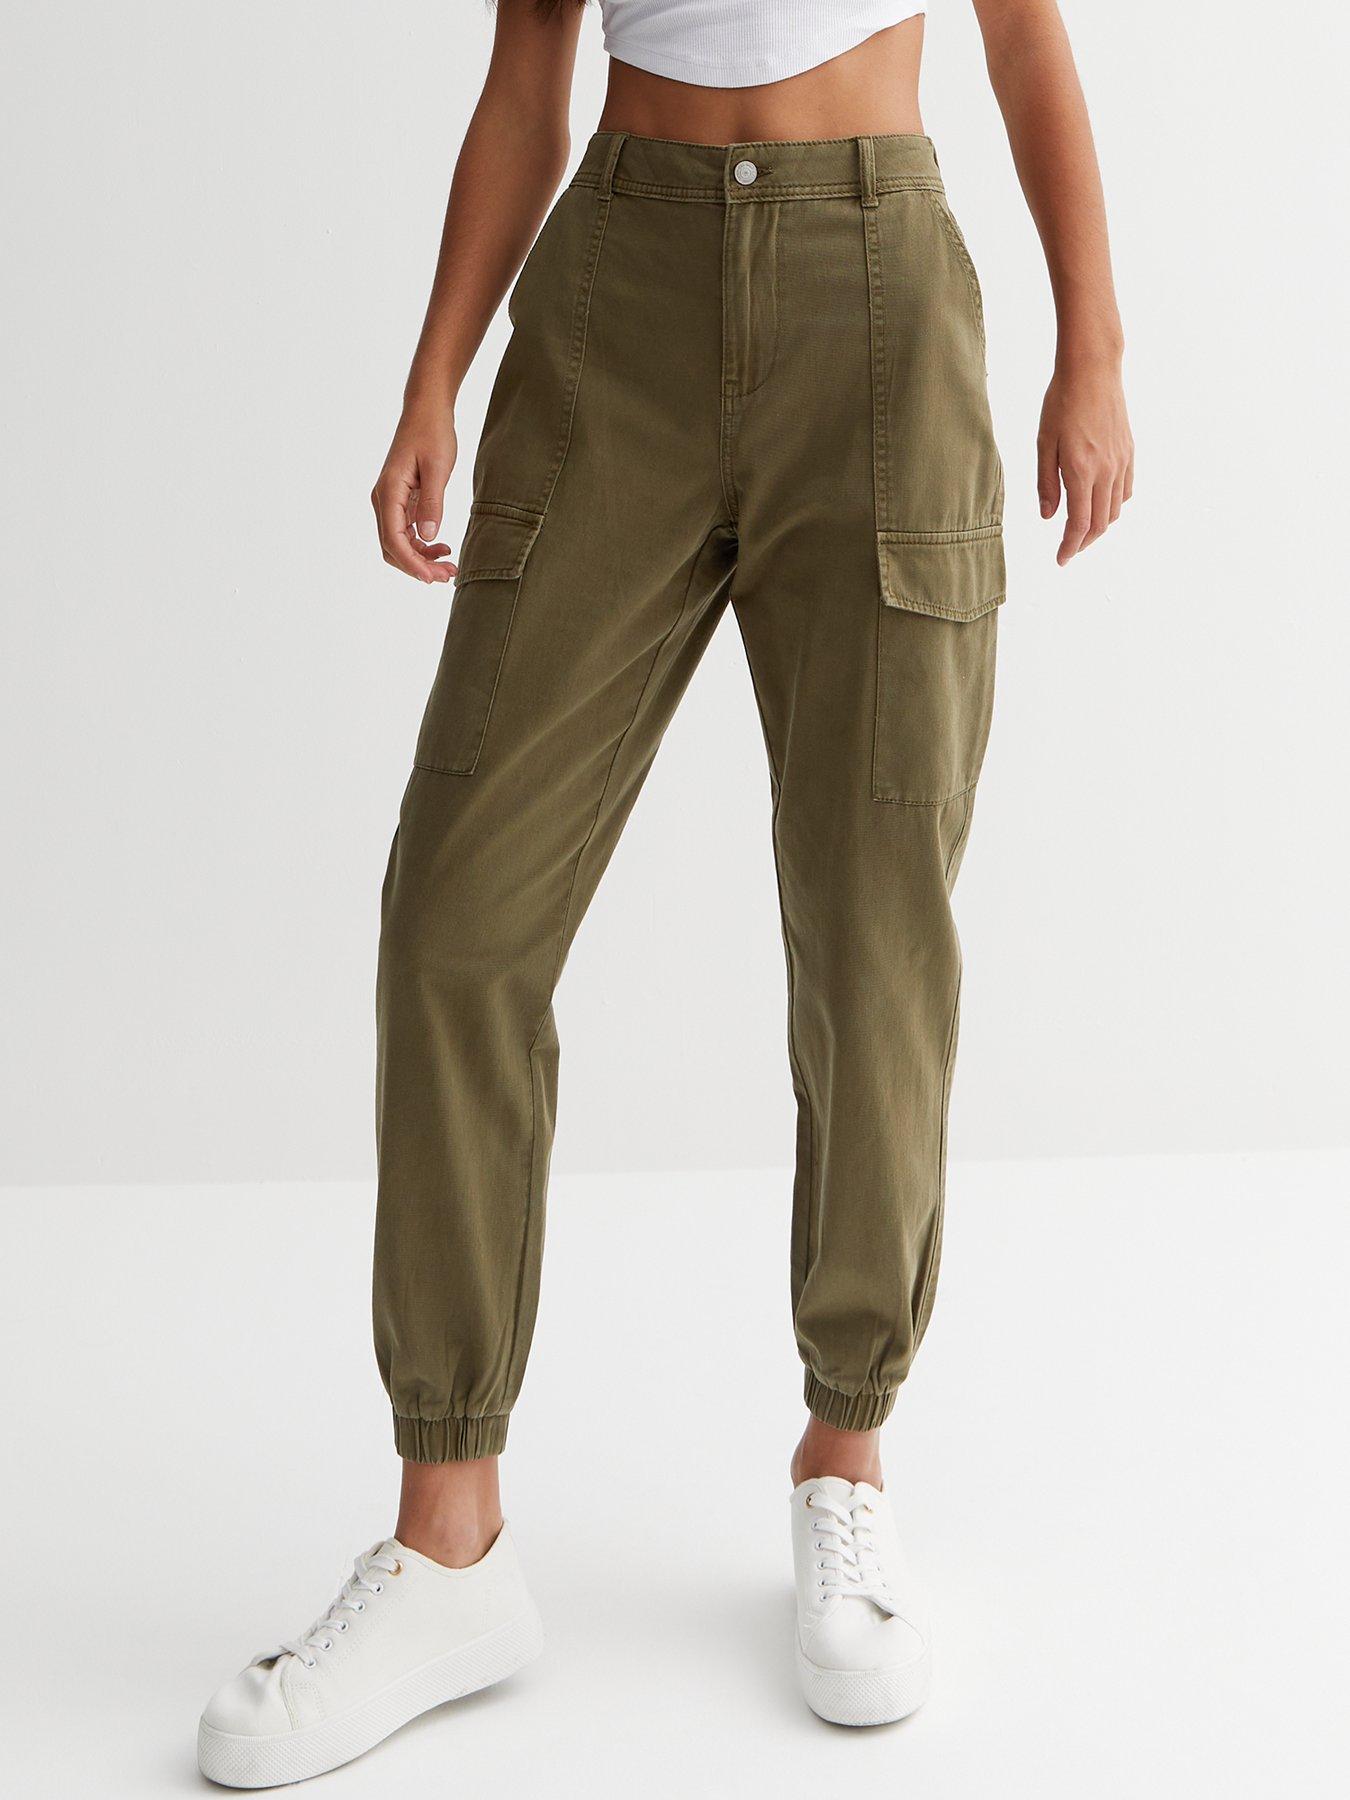 Hollister check pyjama bottoms in brown, ASOS